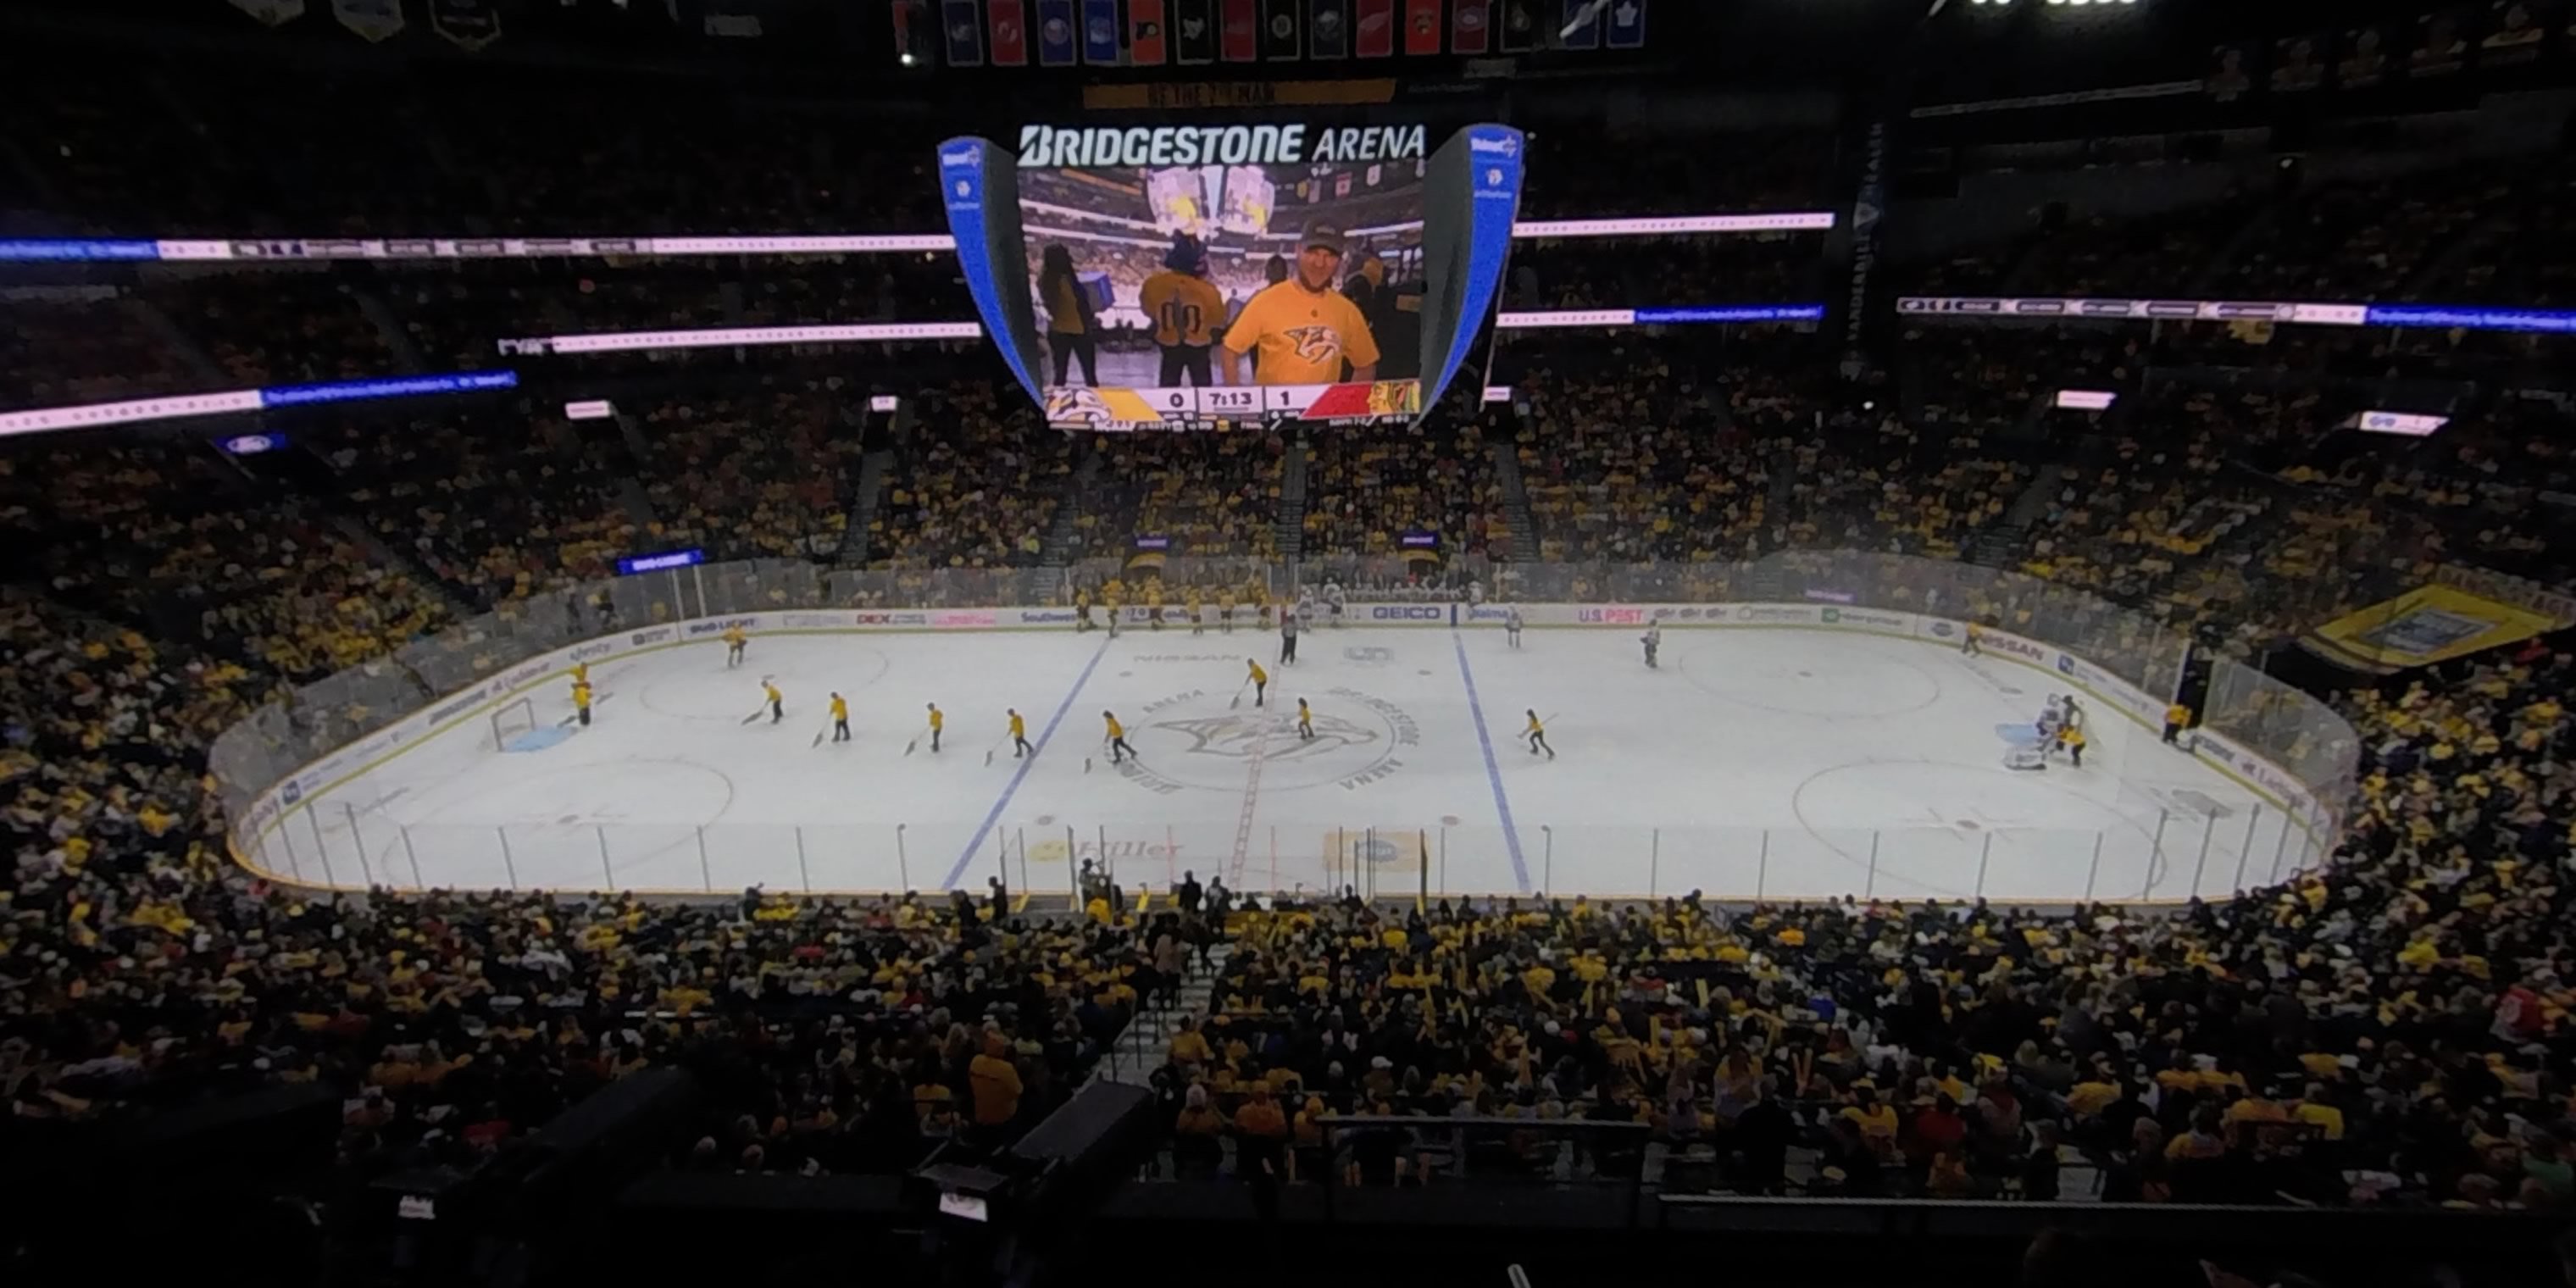 section 209 panoramic seat view  for hockey - bridgestone arena